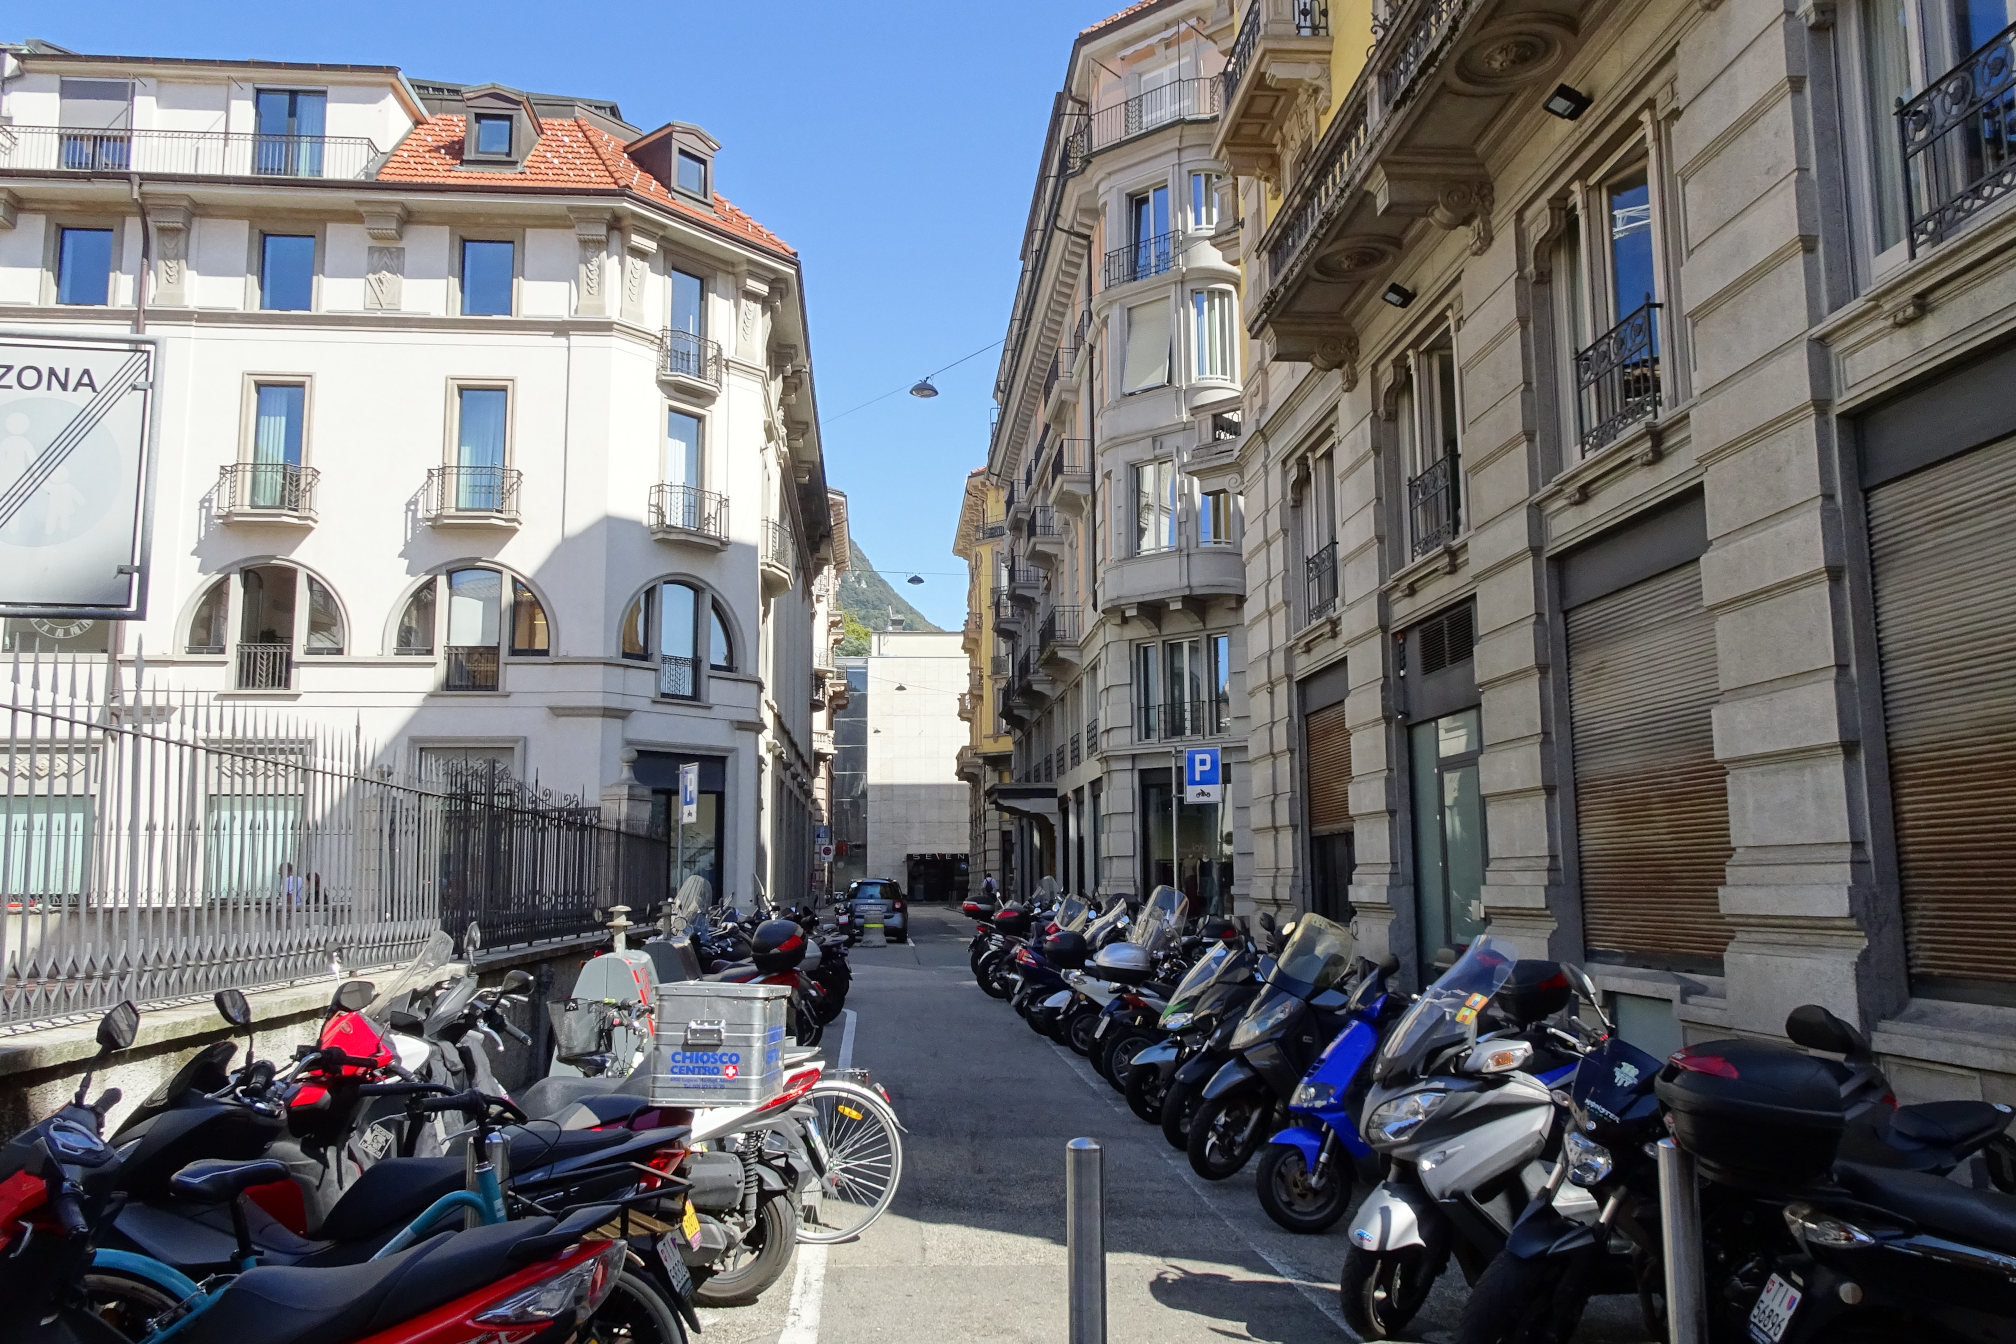 Motorbikes In Lugano